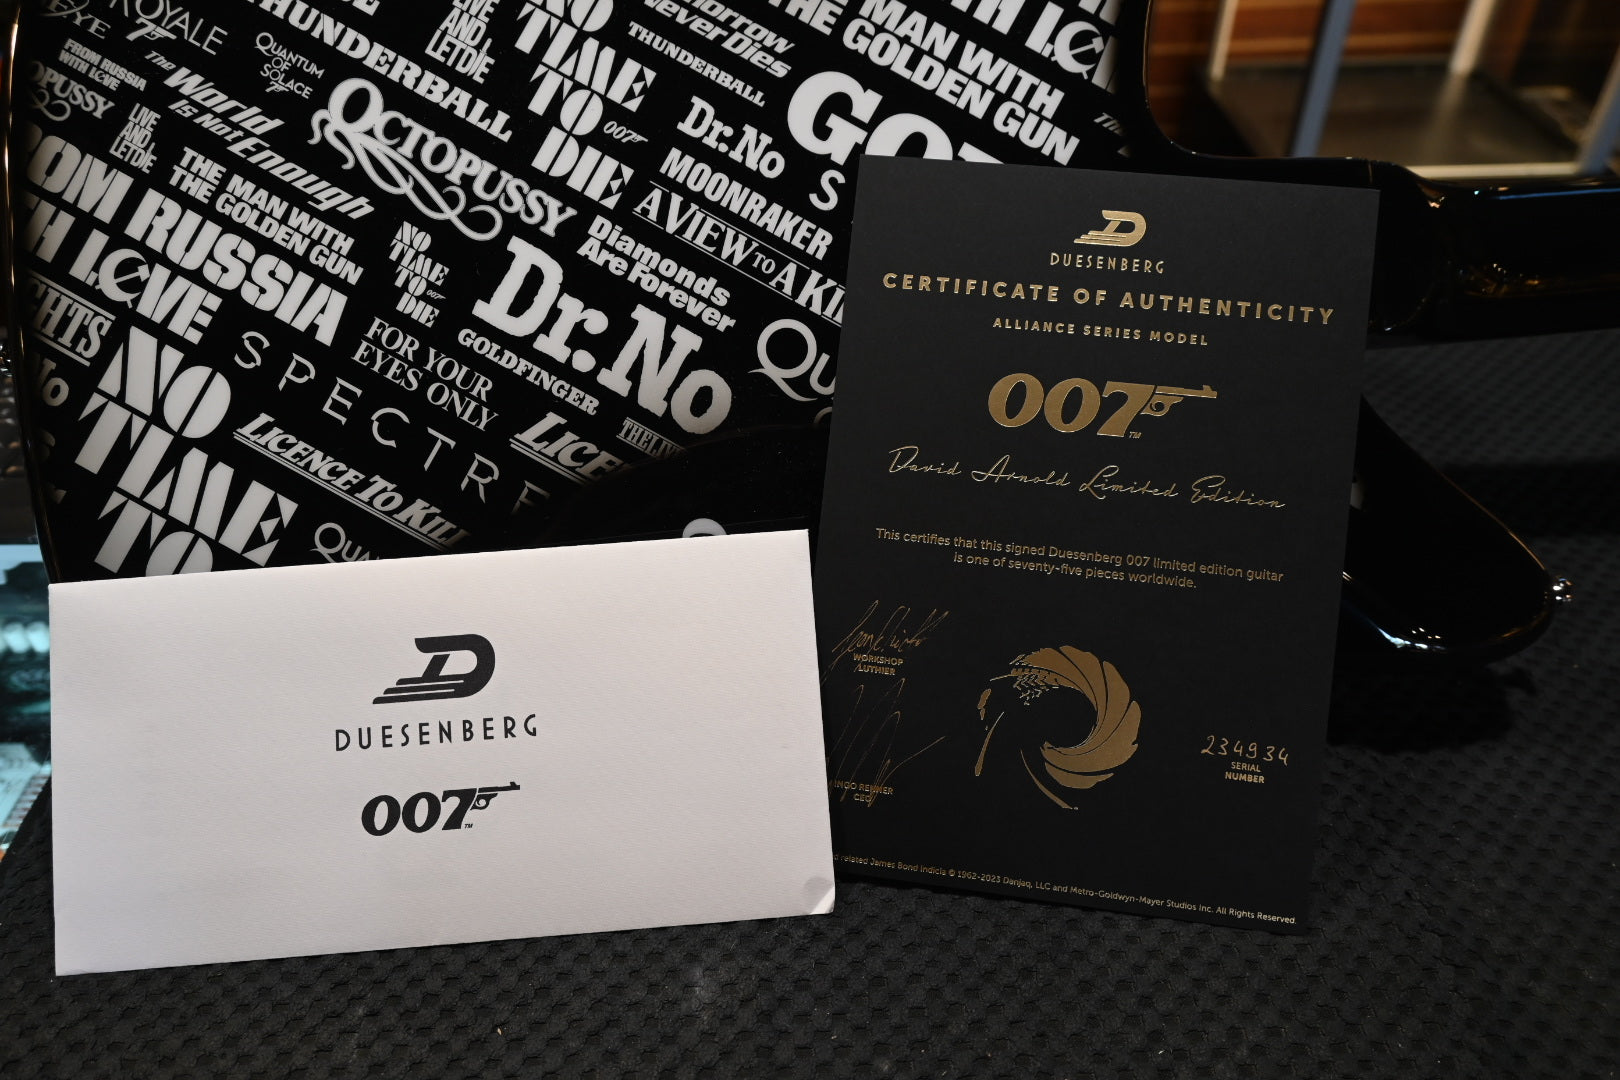 Duesenberg Alliance James Bond 007 Paloma David Arnold Edition - Monochrome Black and White Guitar #4934 - Danville Music